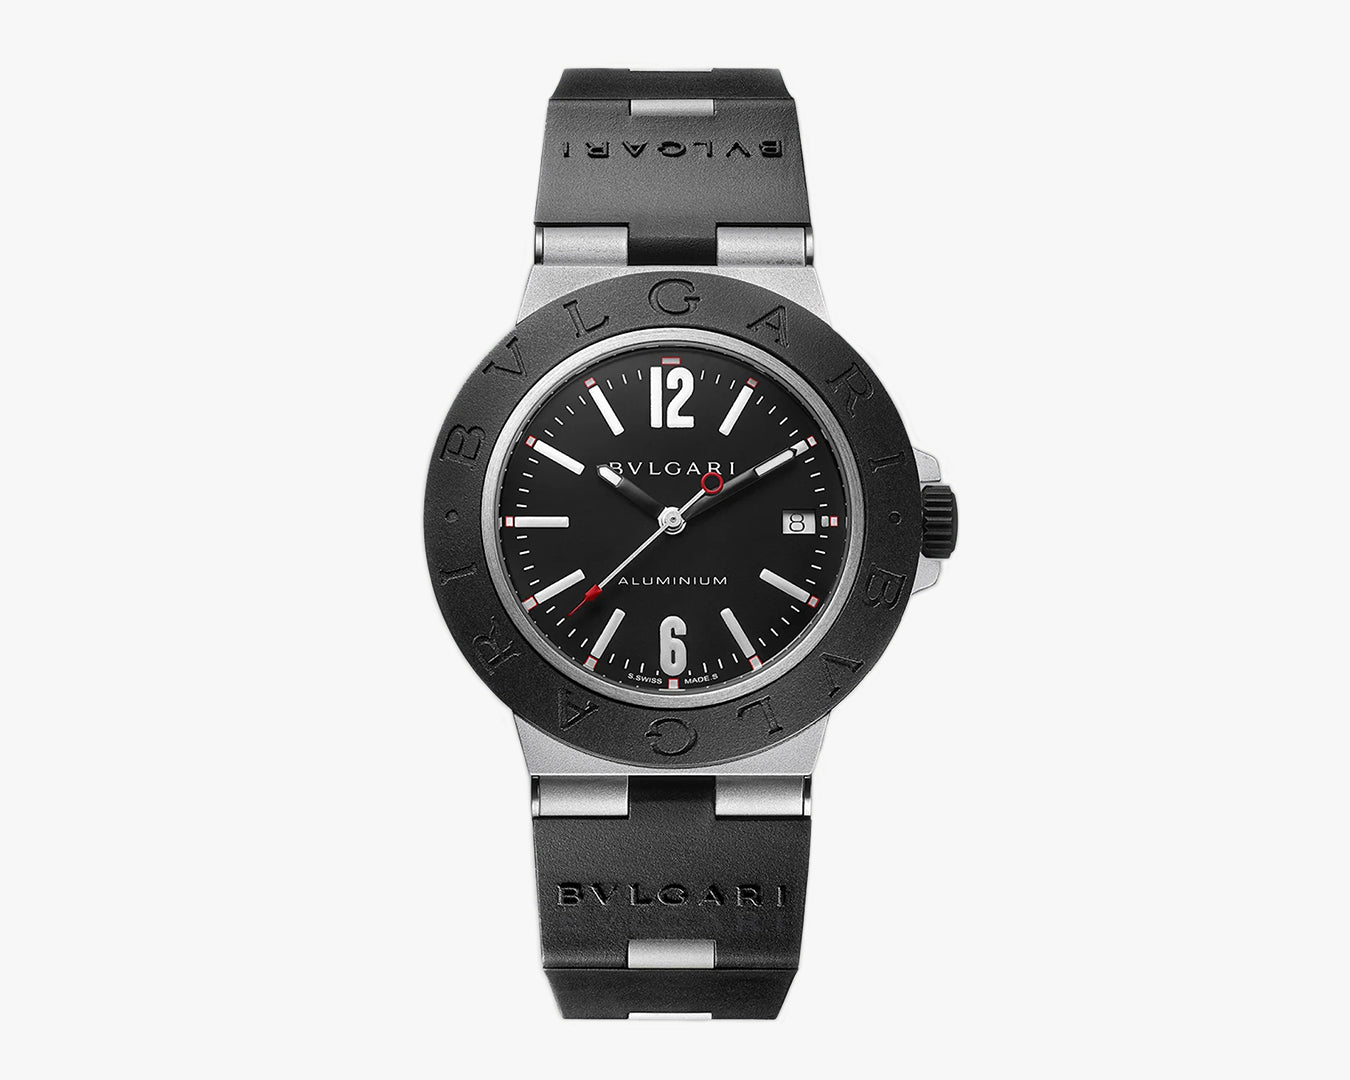 Bulgari Diagono Aluminum Men's Automatic Watch AL 44 TA